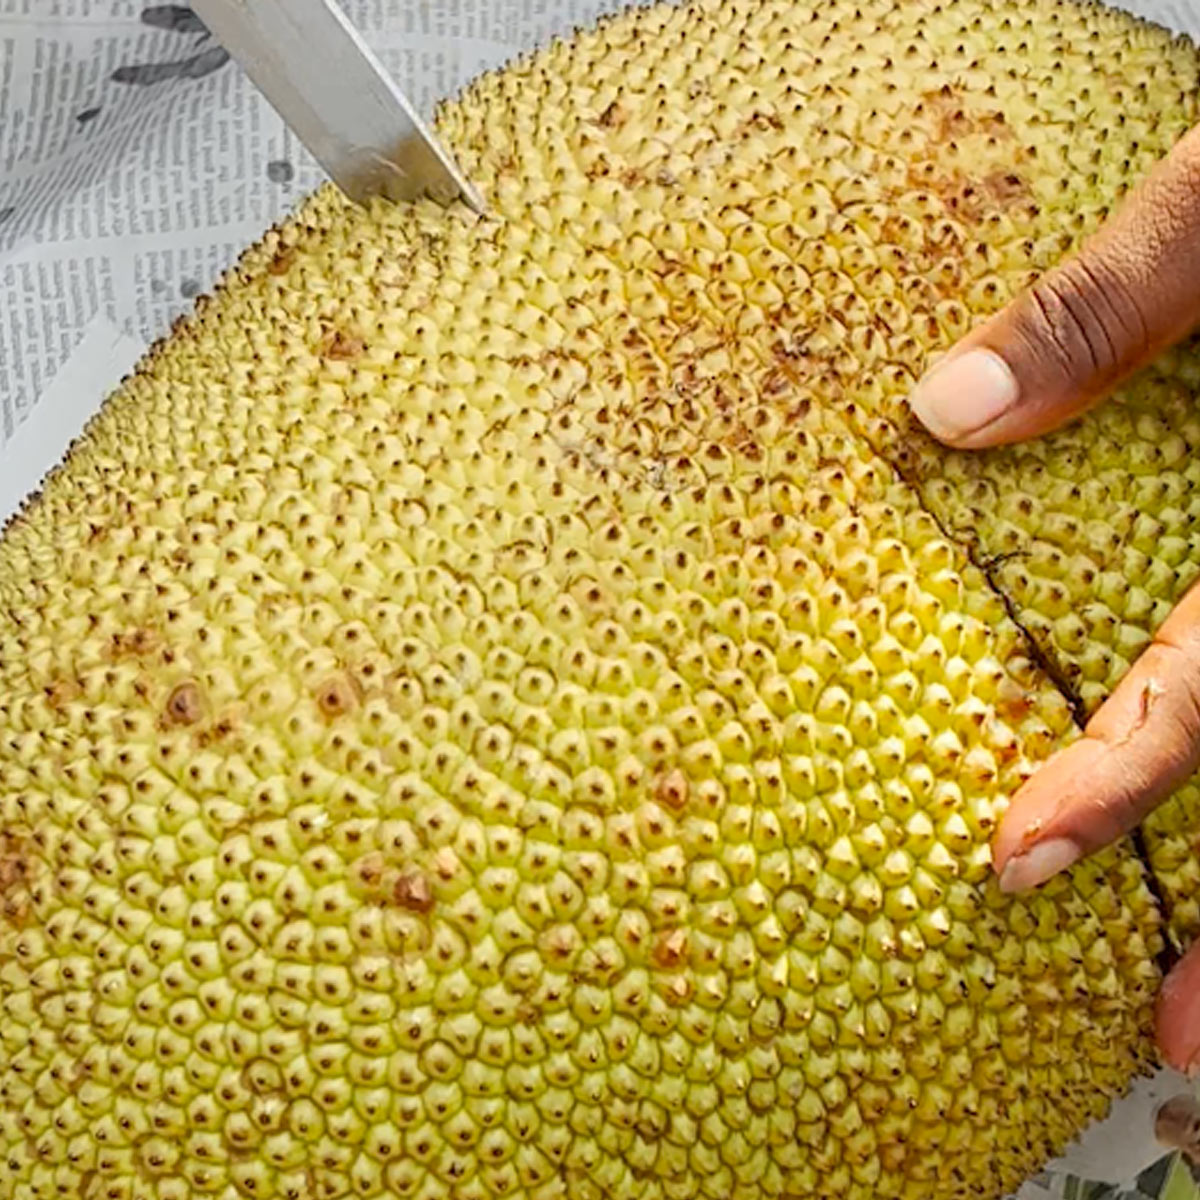 Cut jackfruit into two